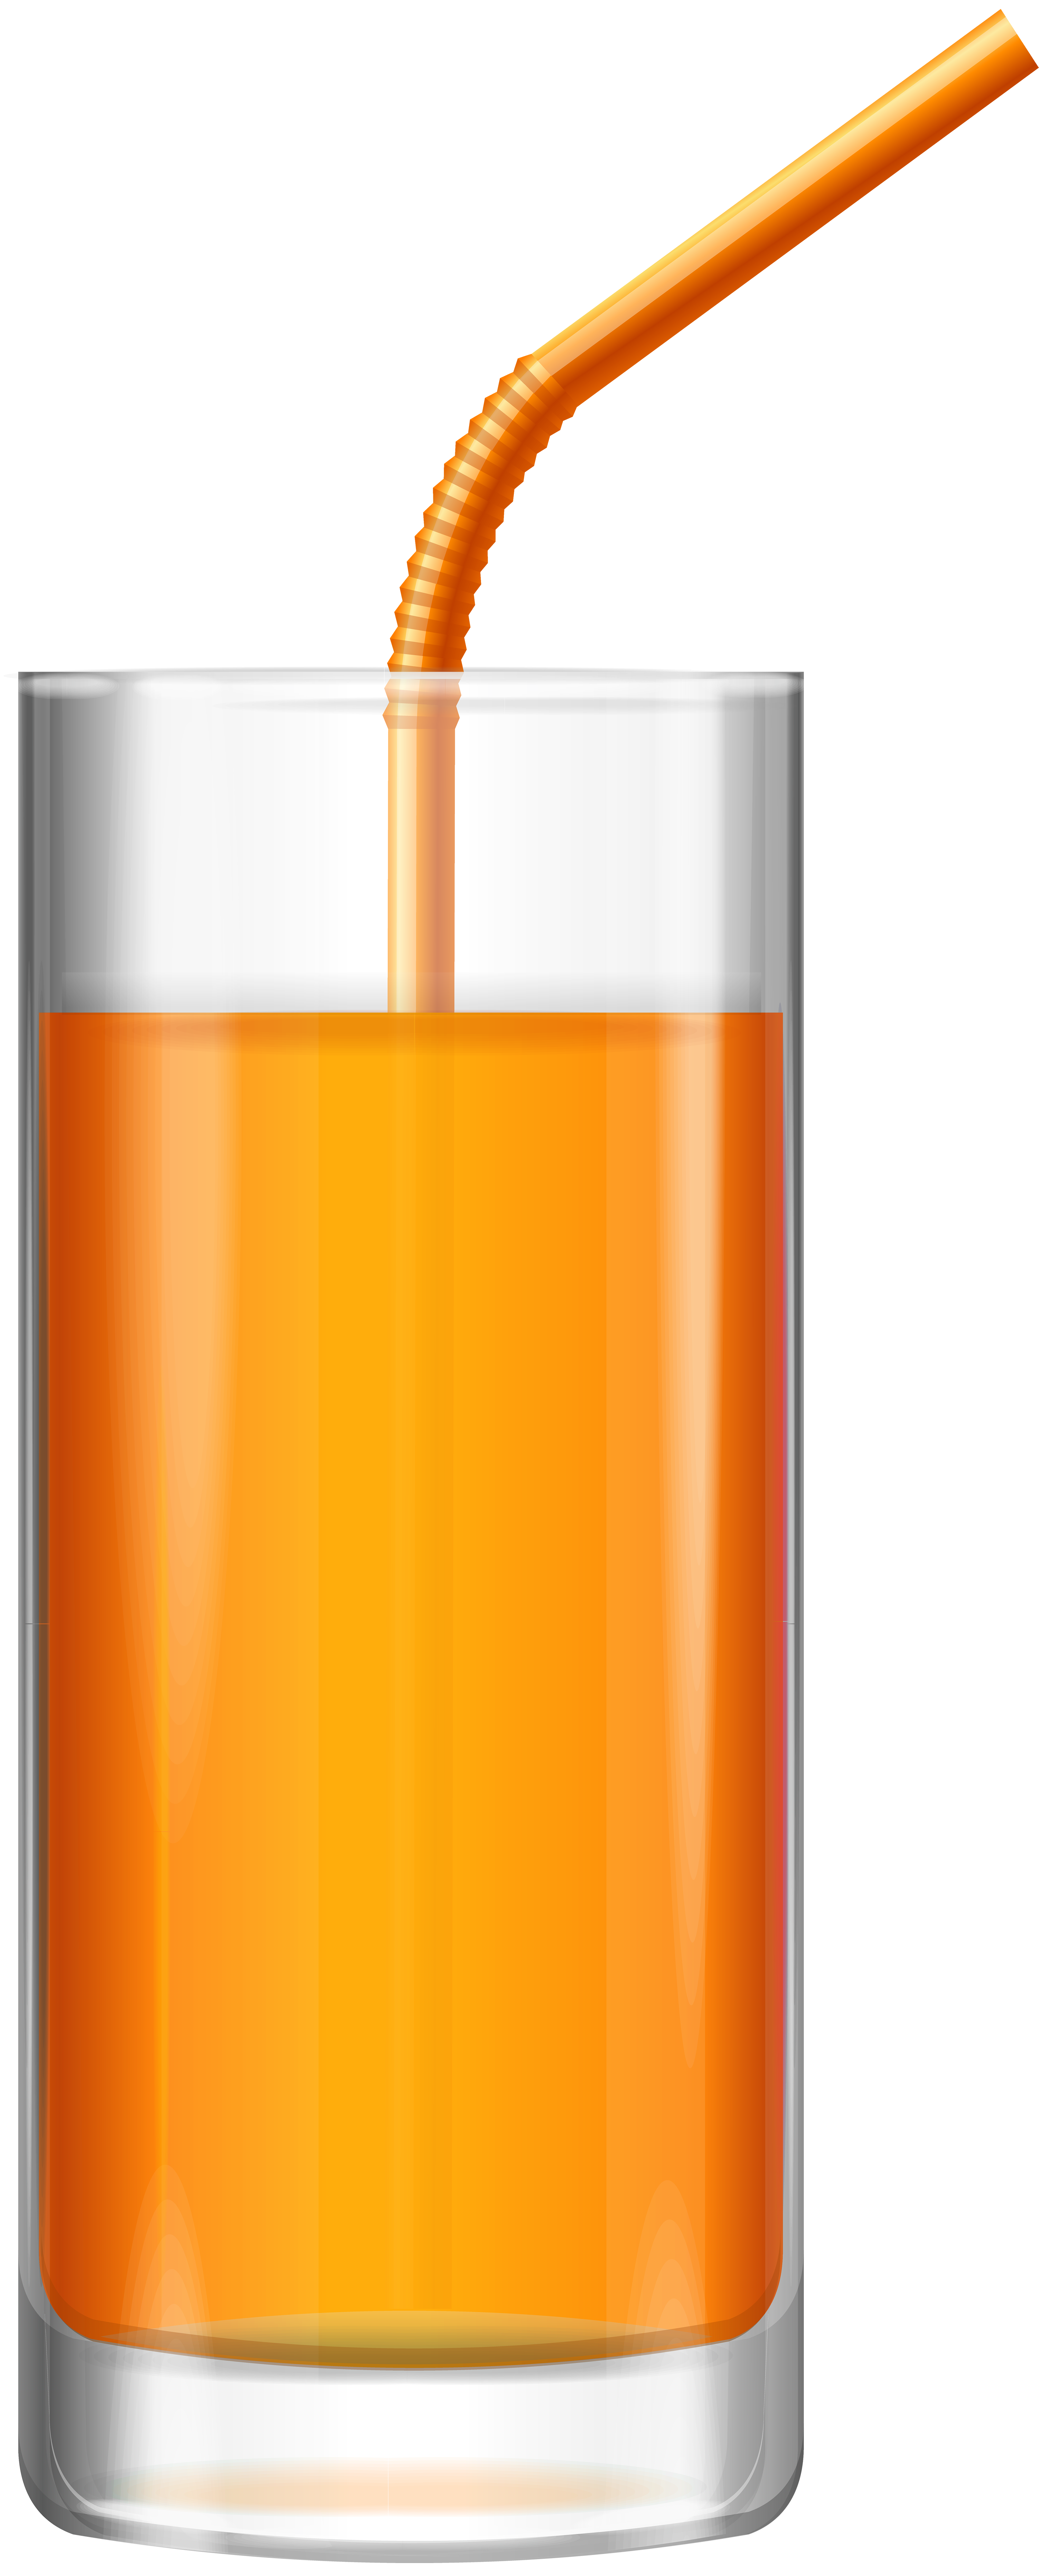 Orange Juice PNG Clip Art Image.